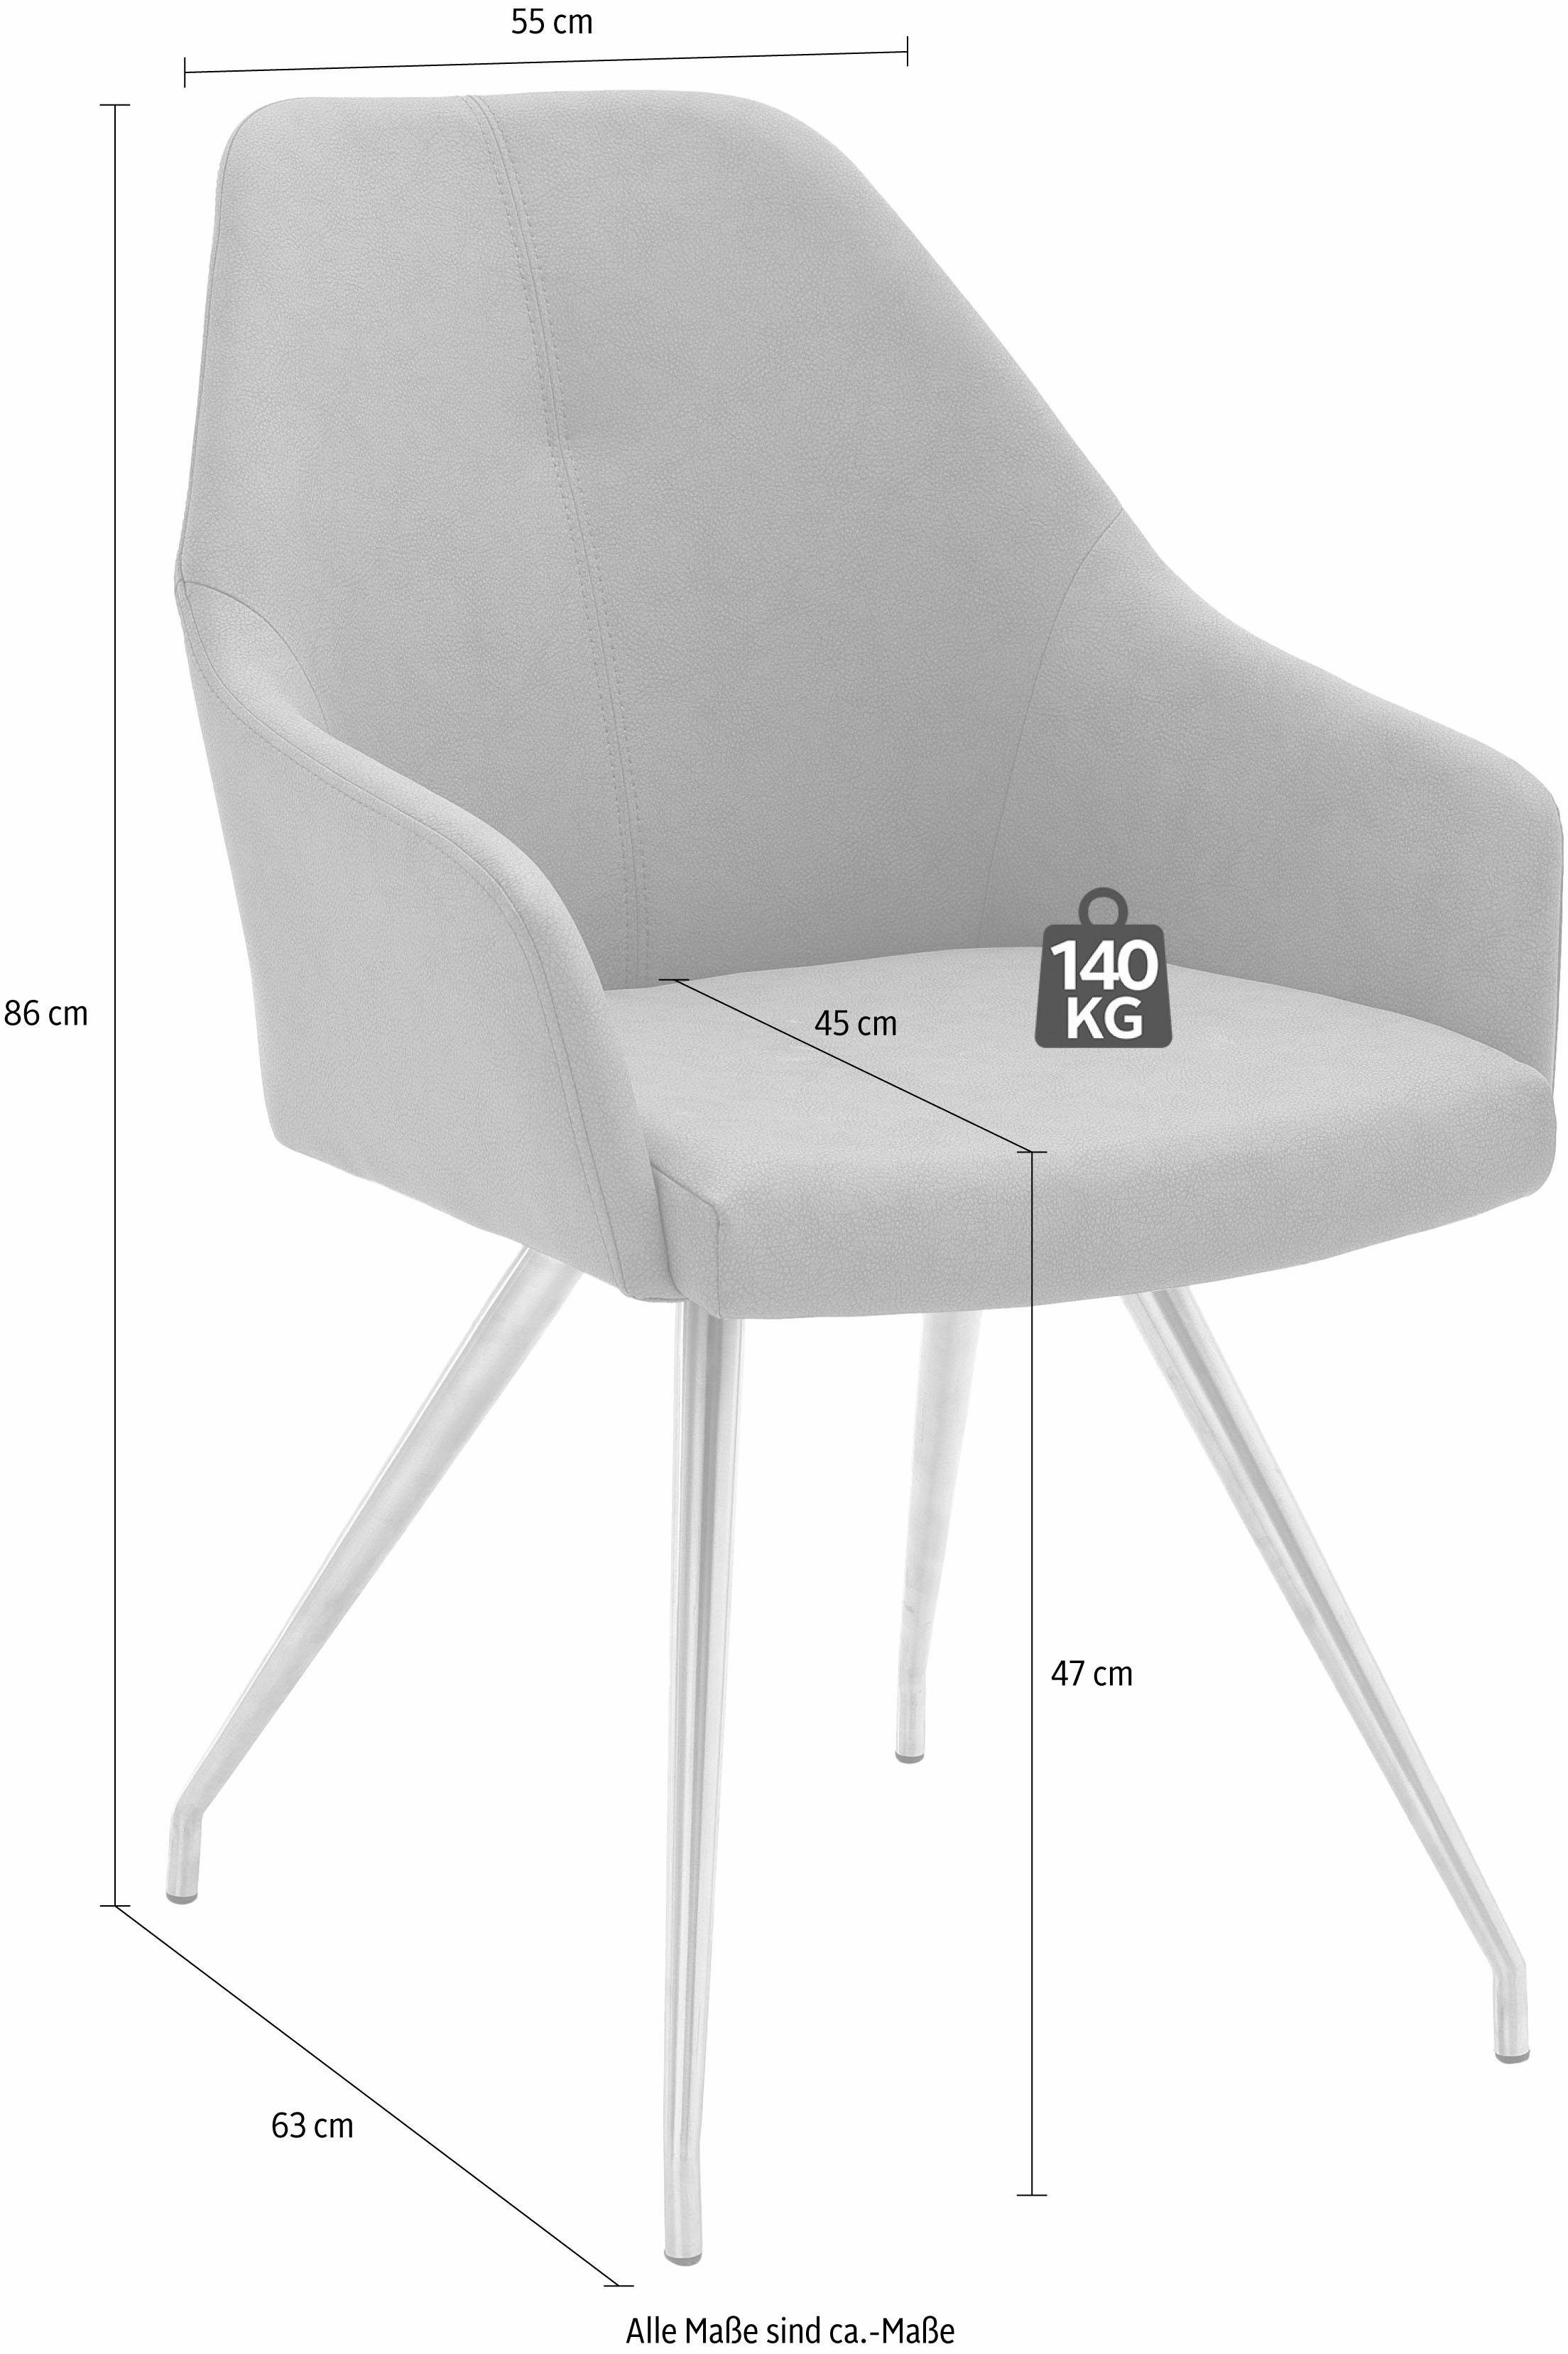 A-Oval Stuhl bis Taupe Madita 2 MCA St), 140 belastbar Kg 4-Fußstuhl furniture (Set, Taupe |